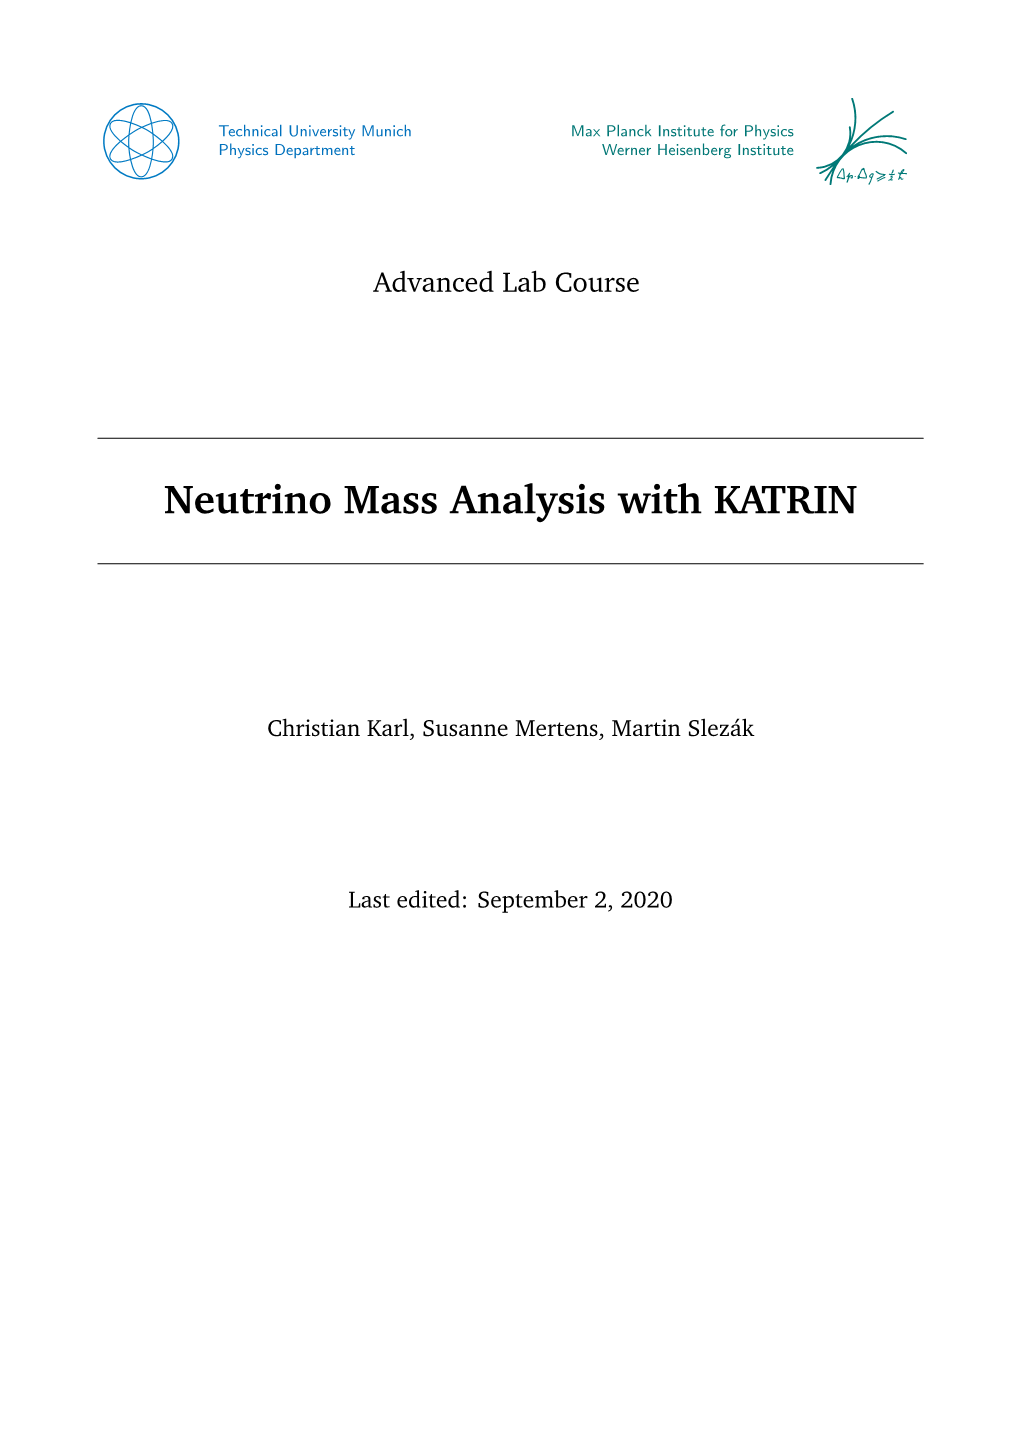 Neutrino Mass Analysis with KATRIN